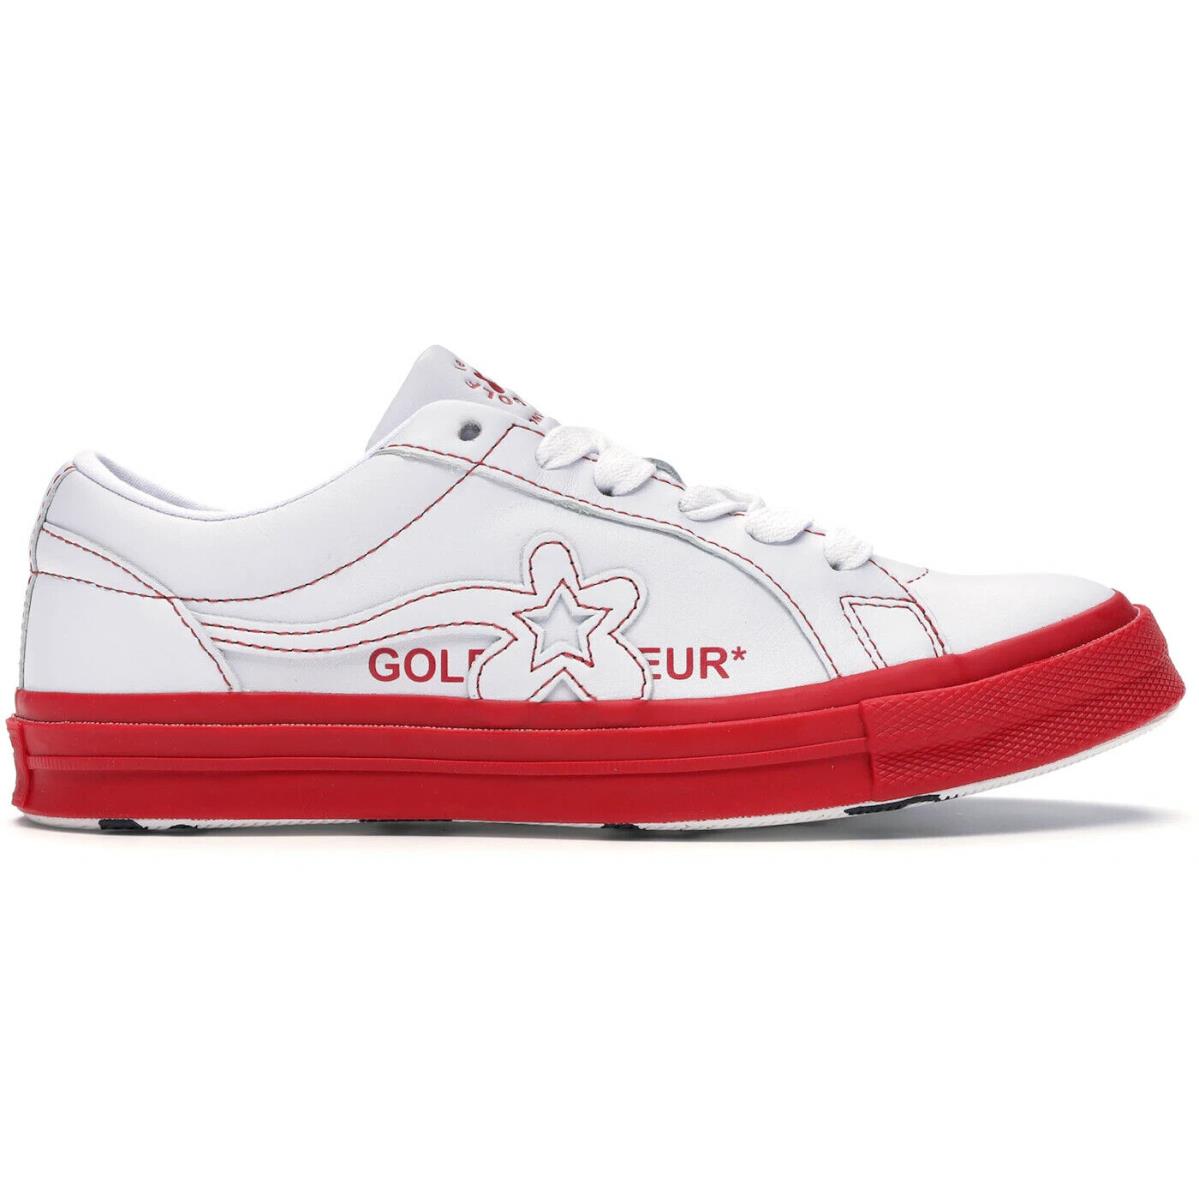 Converse One Star OX x Golf Le Fleur Men`s Sz 12 / 164026C Red White - white/ red/ black